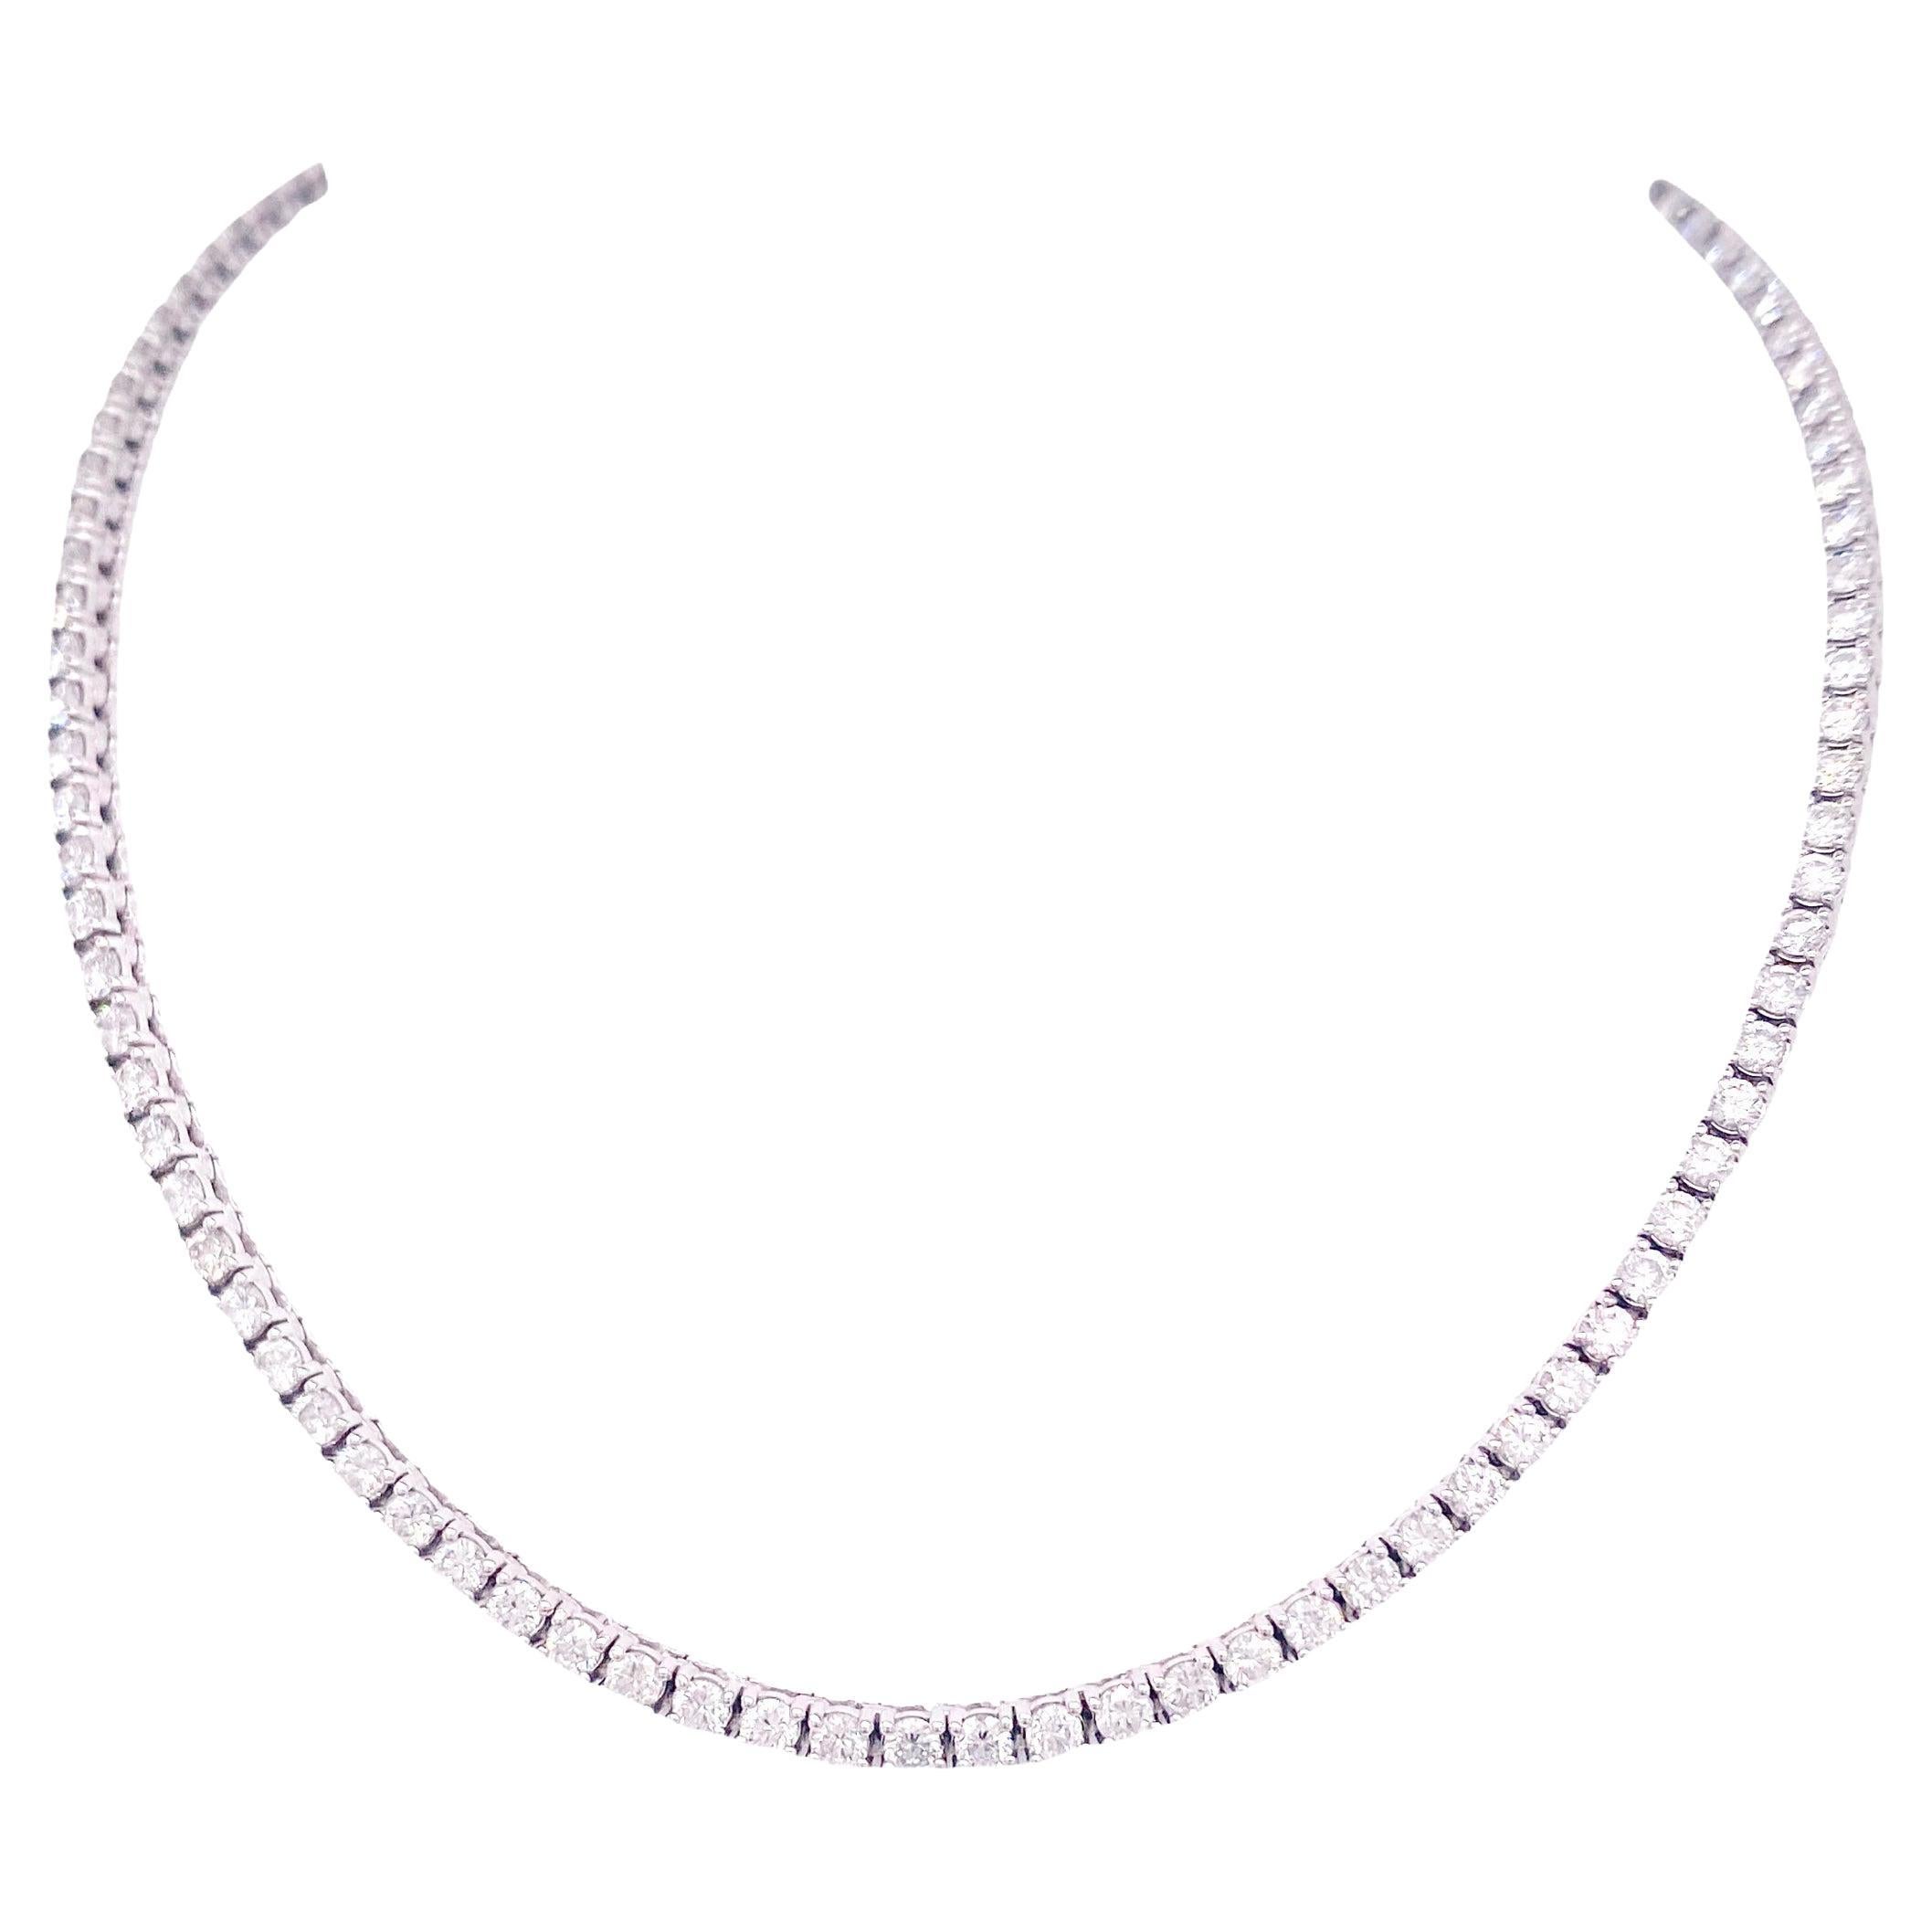 Eternity Riviera Necklace 5.50 Carat Diamond Tennis Necklace, White or Yellow